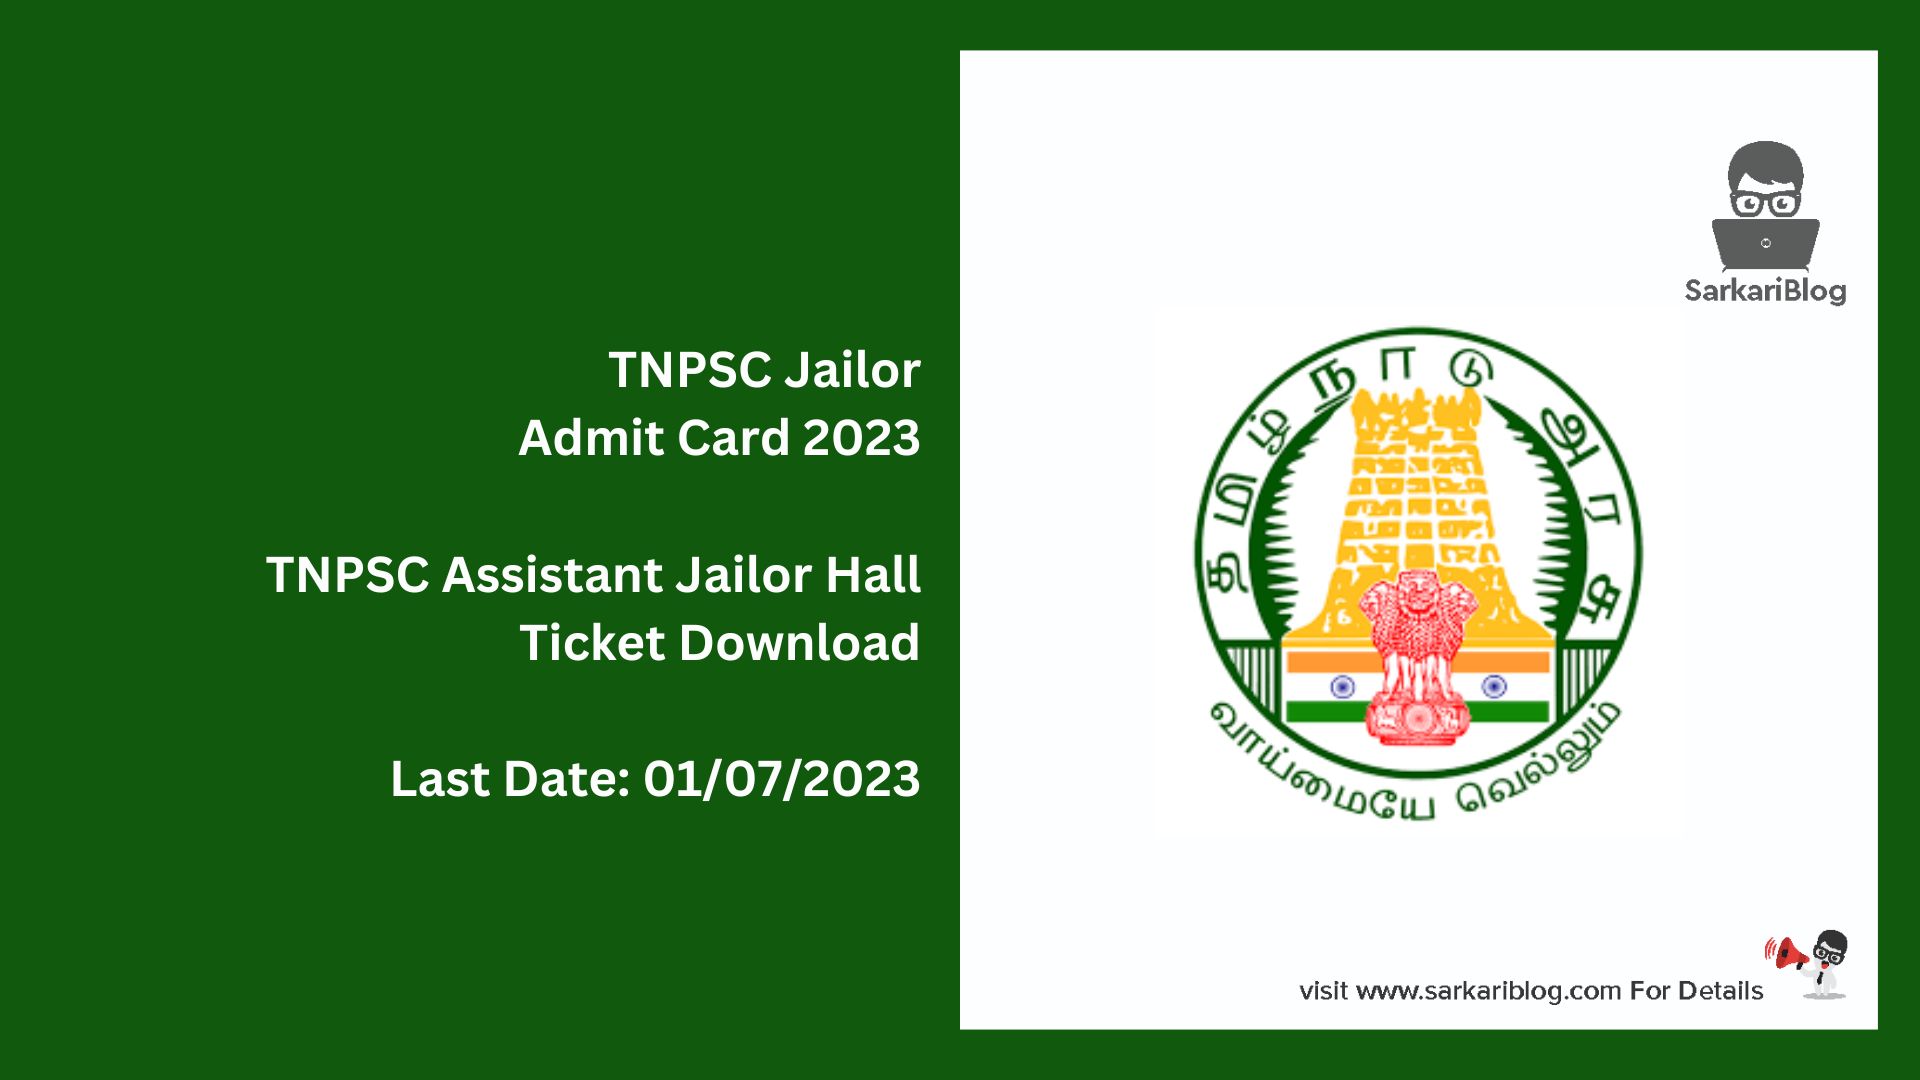 TNPSC Jailor Admit Card 2023